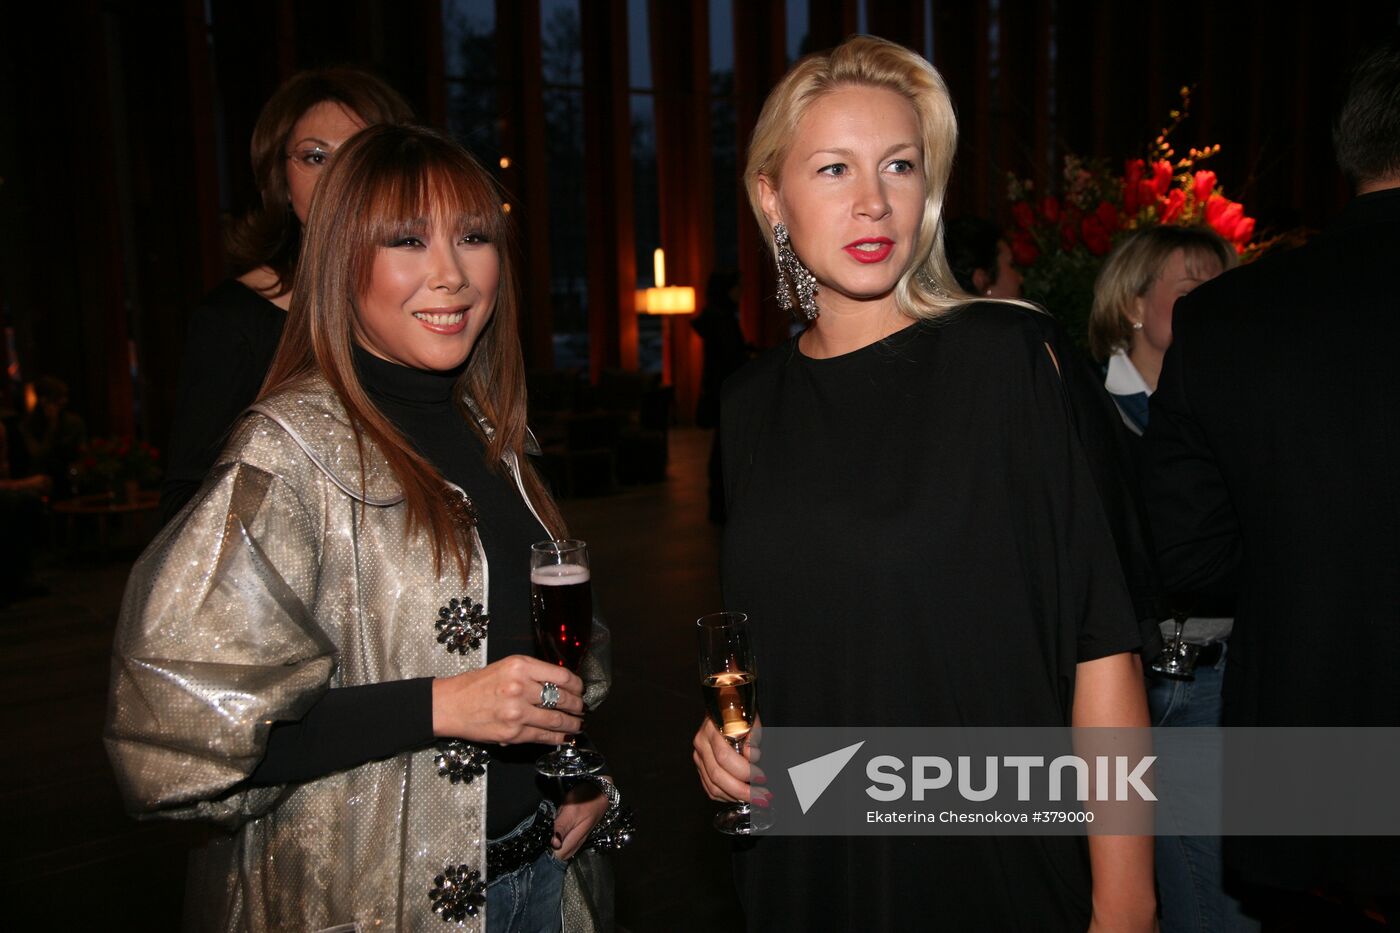 Anita Tsoy and Yelena Odintsova